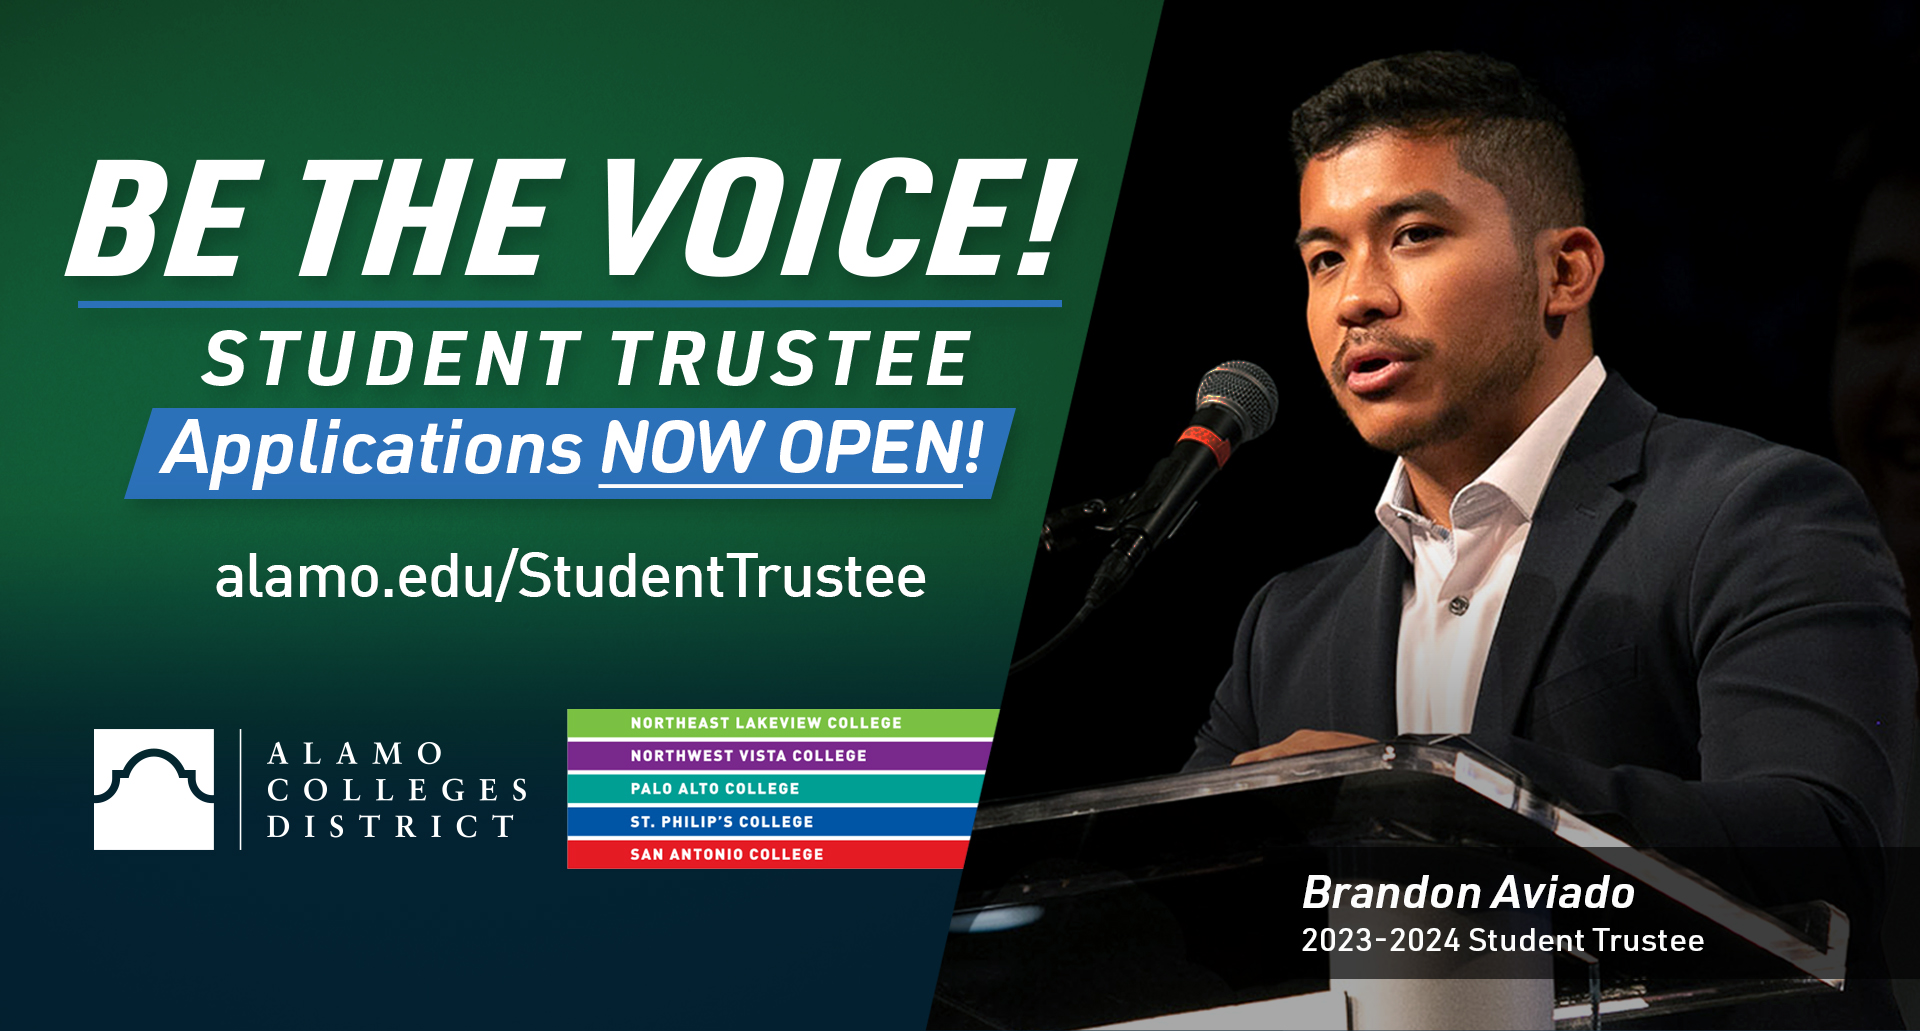 Image: 2023-2024 Student Trustee, Brandon Alavardo speaking at a podium. Text: Be the voice! Student Trustee applications now open! alamo.edu/studenttrustee